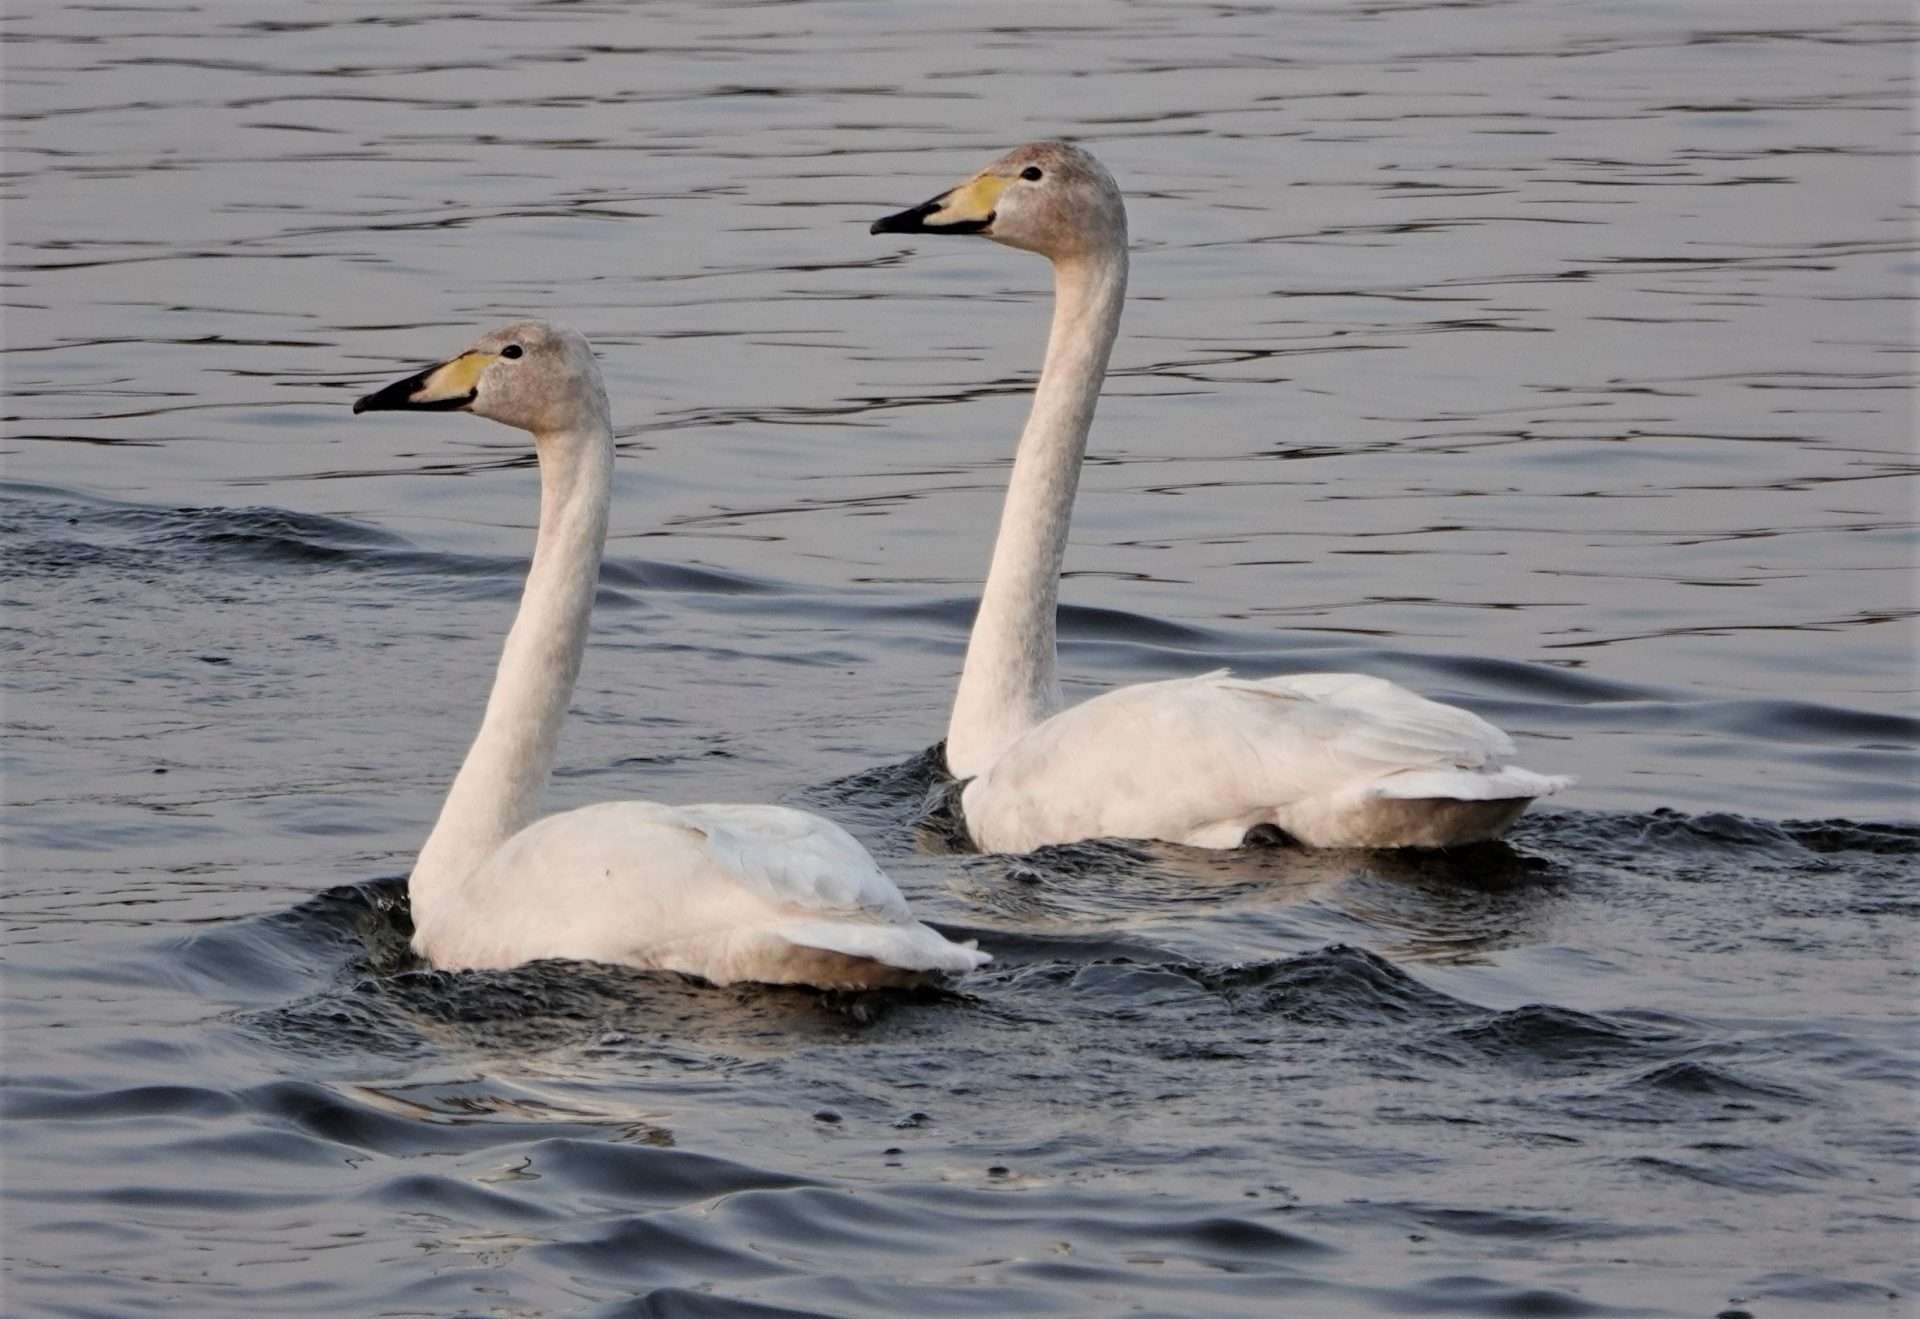 Whooper Swan by Paul Howrihane at Lower Tamar Lake